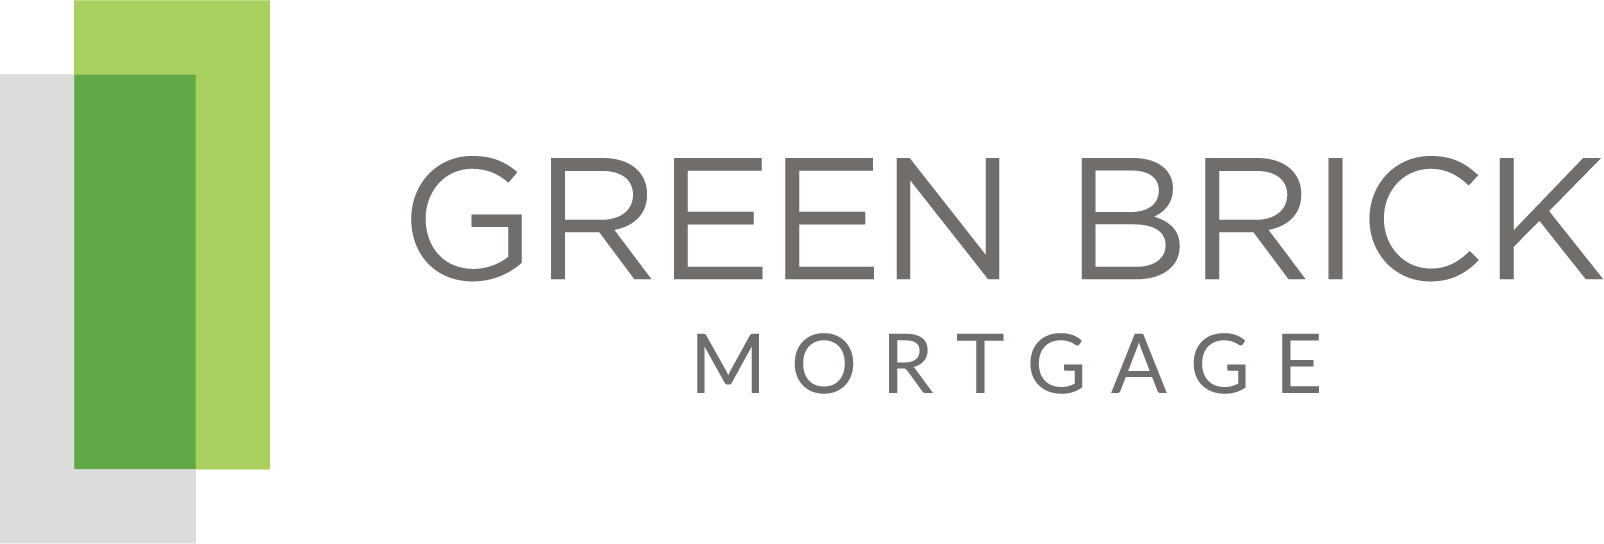 Green Brick Mortgage